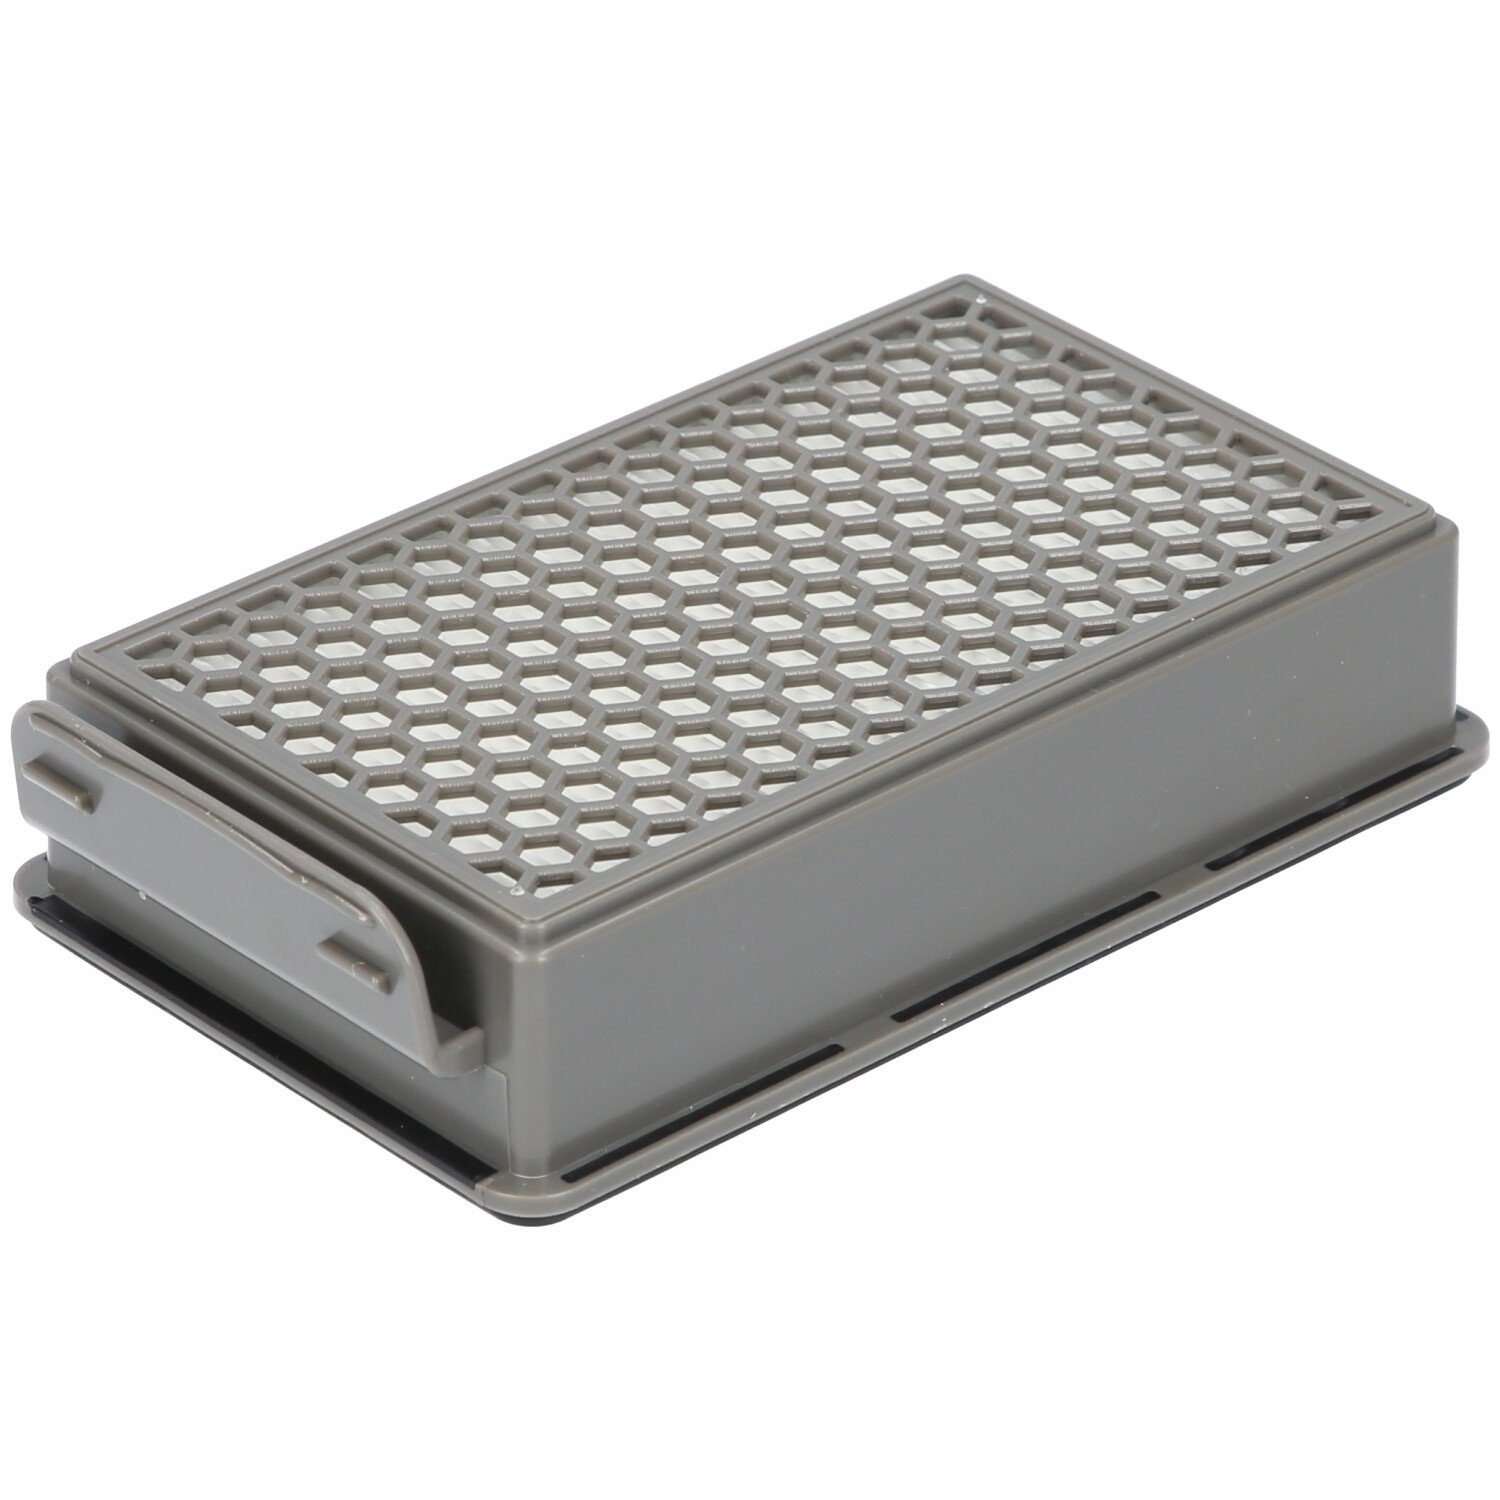 / / TW3731RA Filterkassette, Alternative Filter-Set TW3753EA Rundfilter, für geeignet / Tefal für 1x 1x TW3786RA, McFilter TW3724RA ZR005901